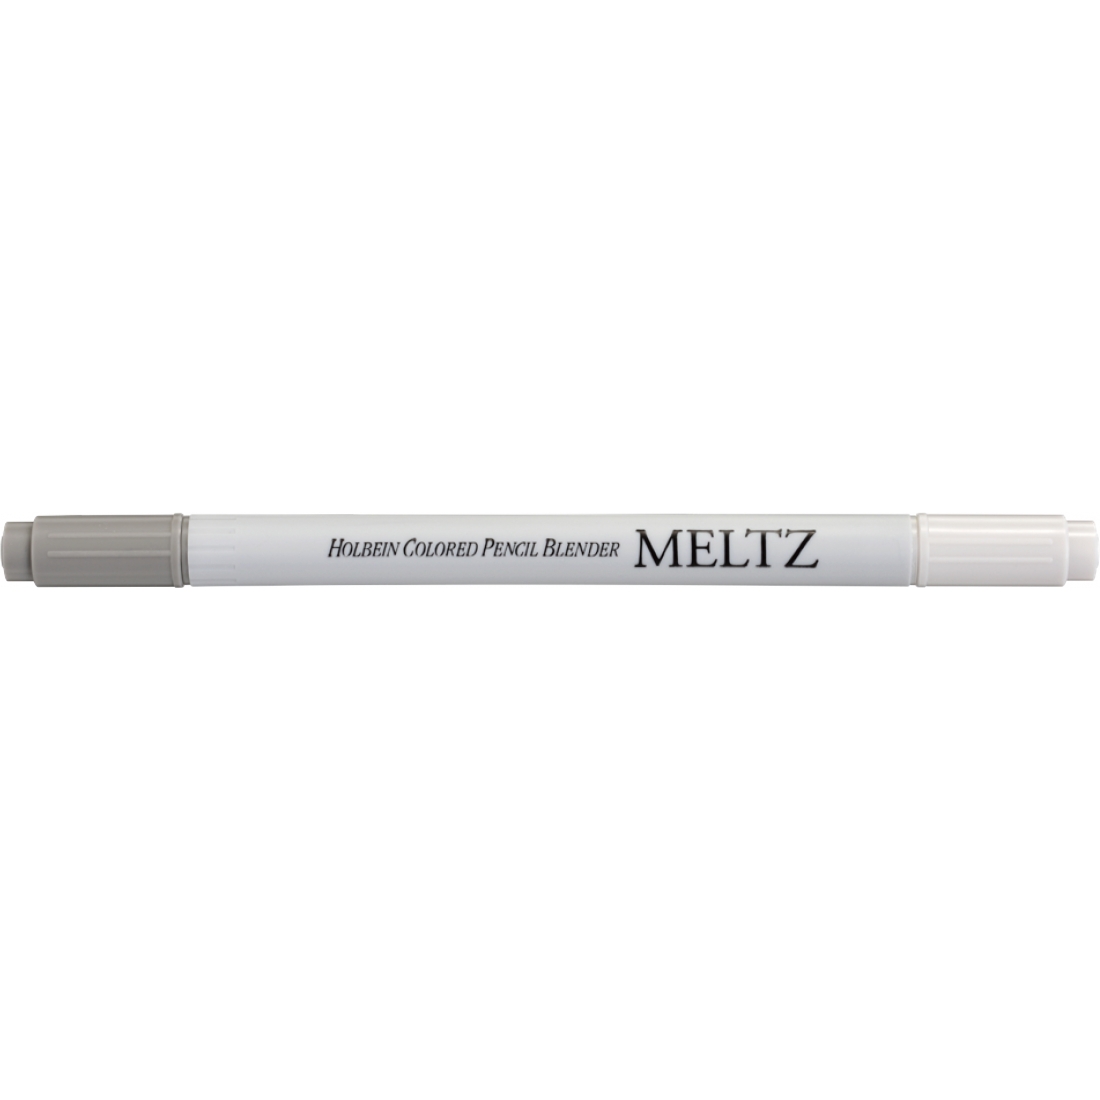 Meltz Pen - Líquido para acuarelar...